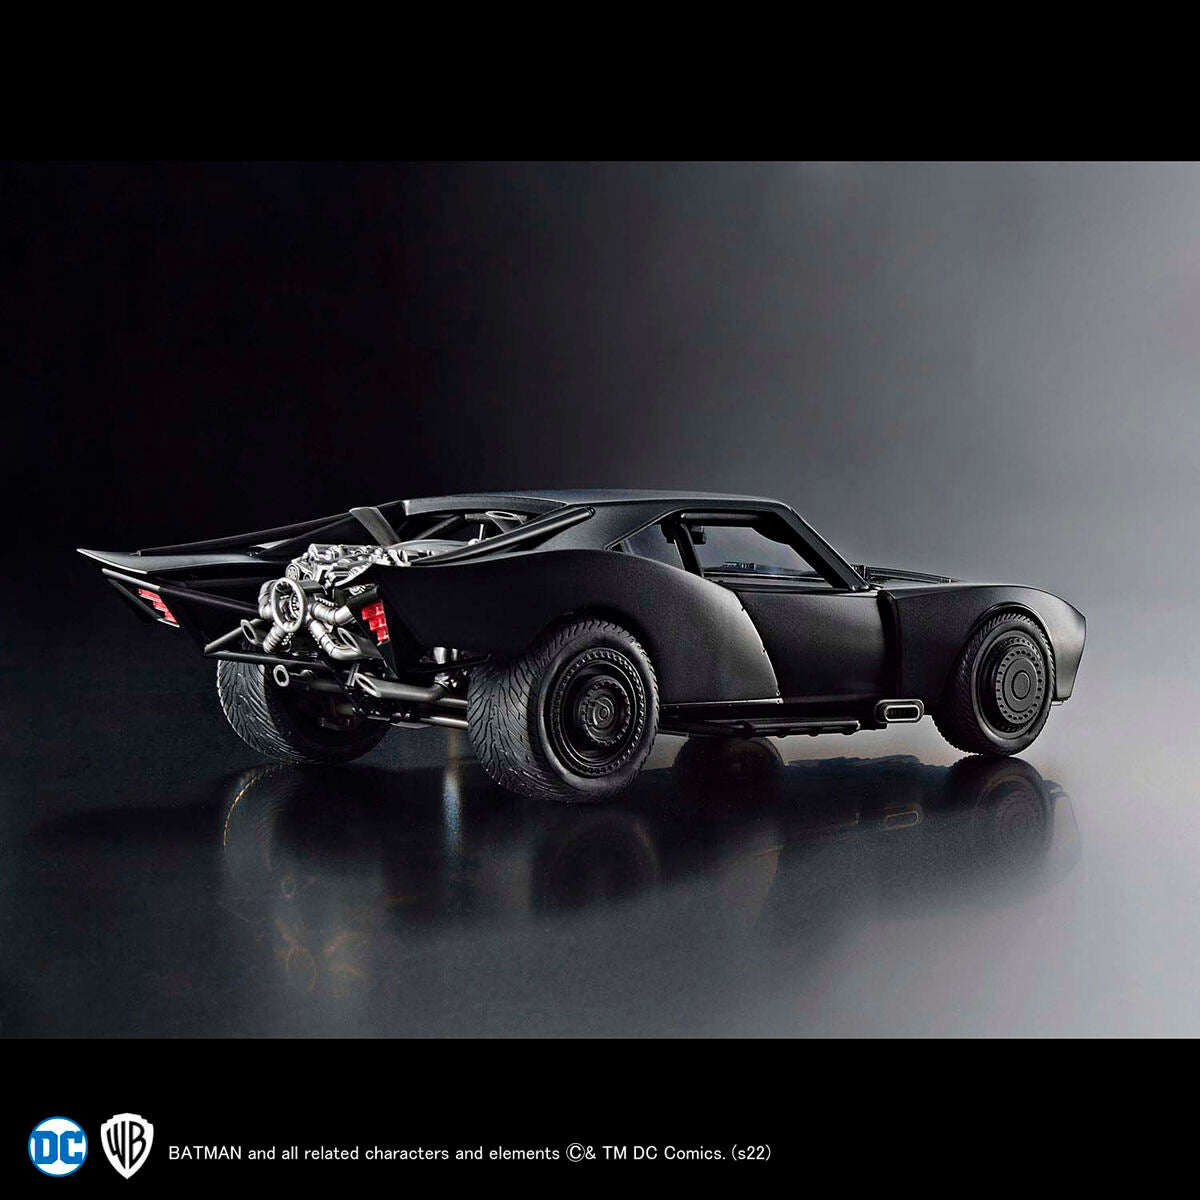 Batmobile (The Batman Ver.)